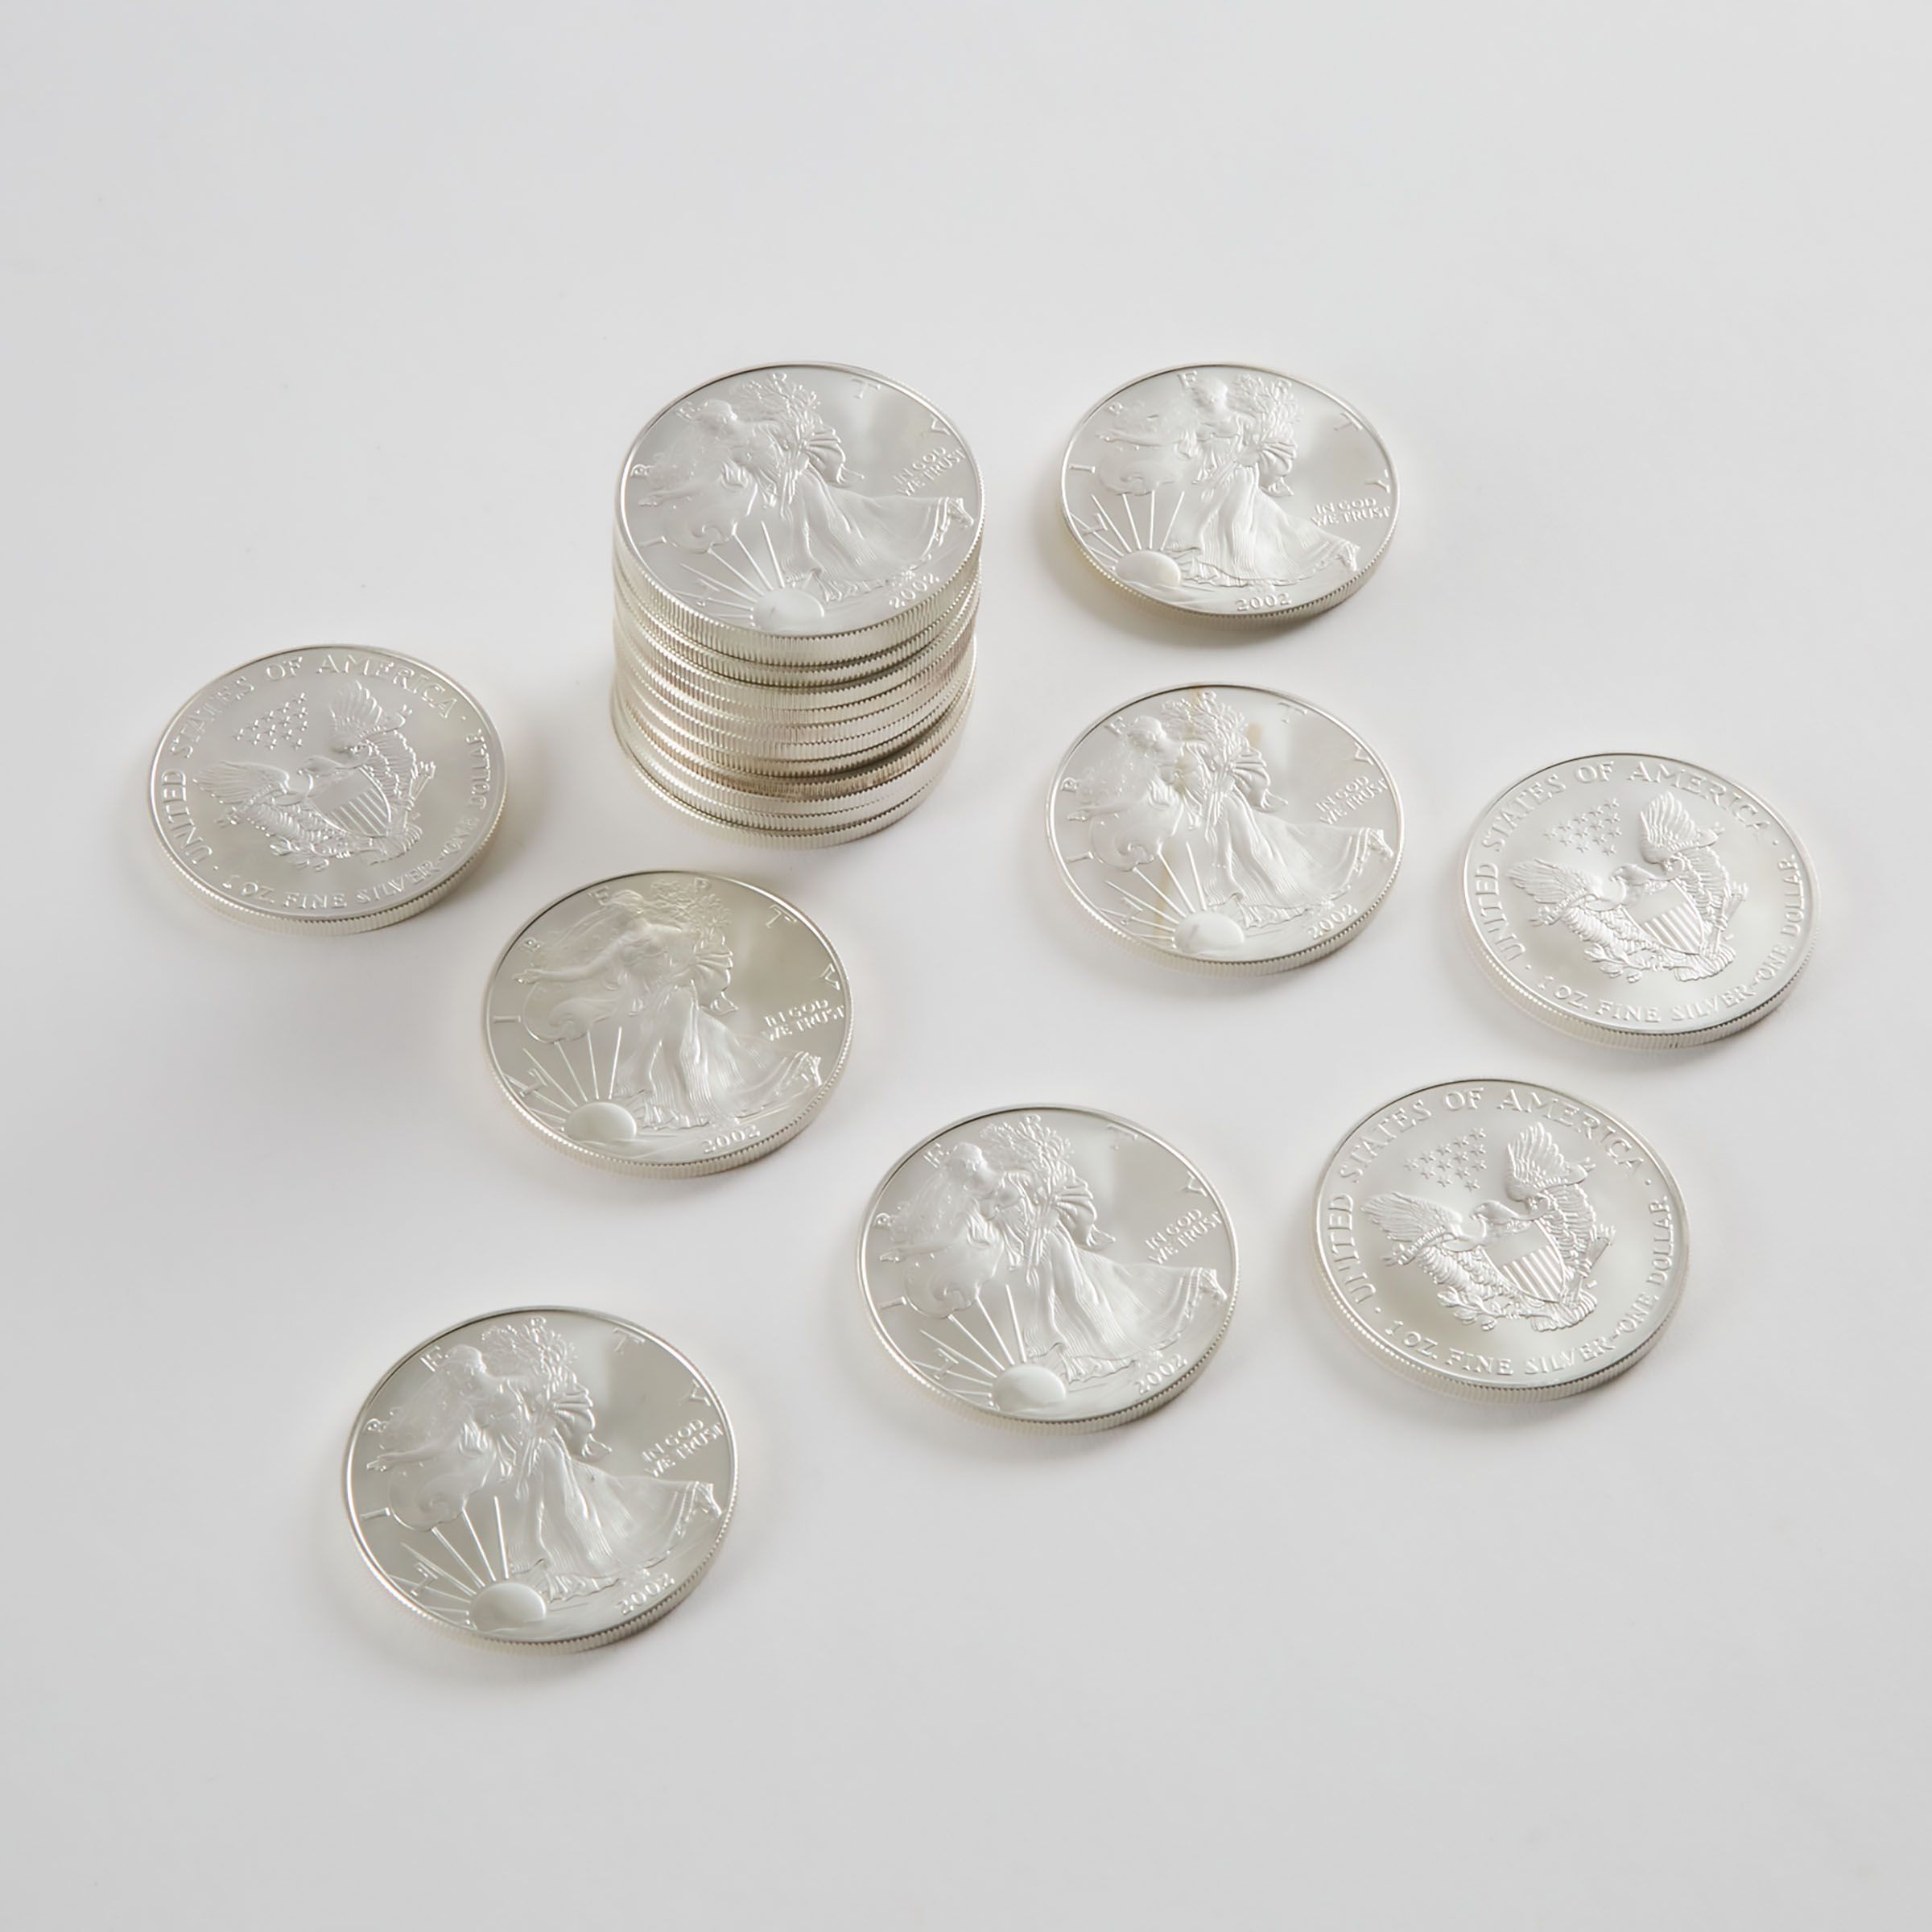 20 x American 2002 $1 Silver Eagle Coins